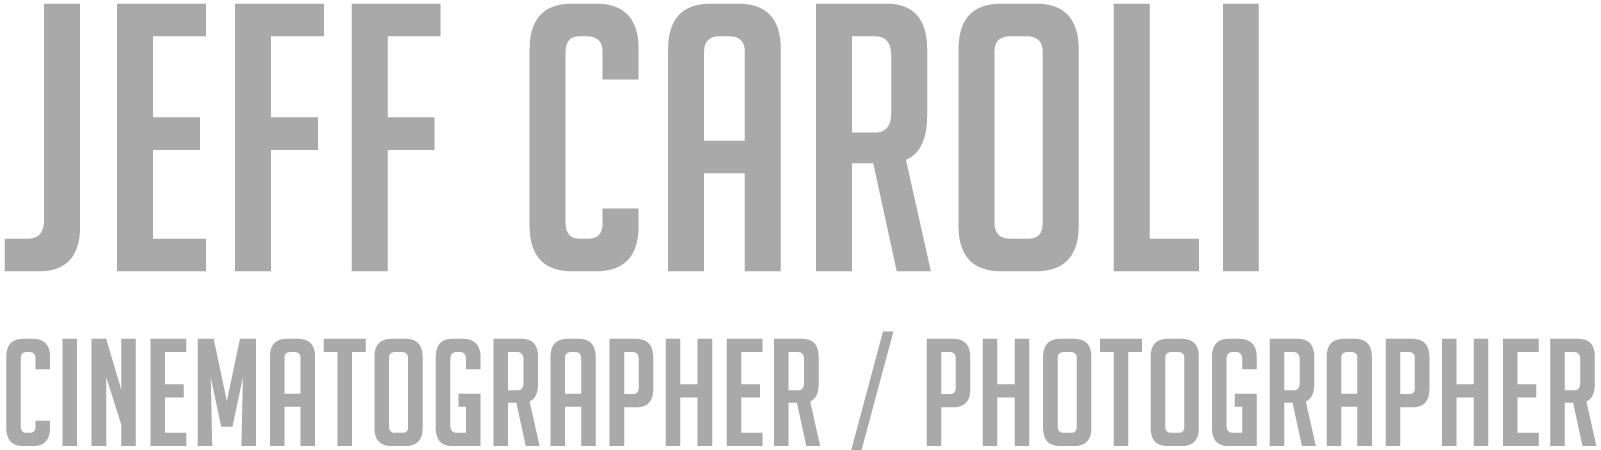 Jeff Caroli, Cinematographer / Photographer